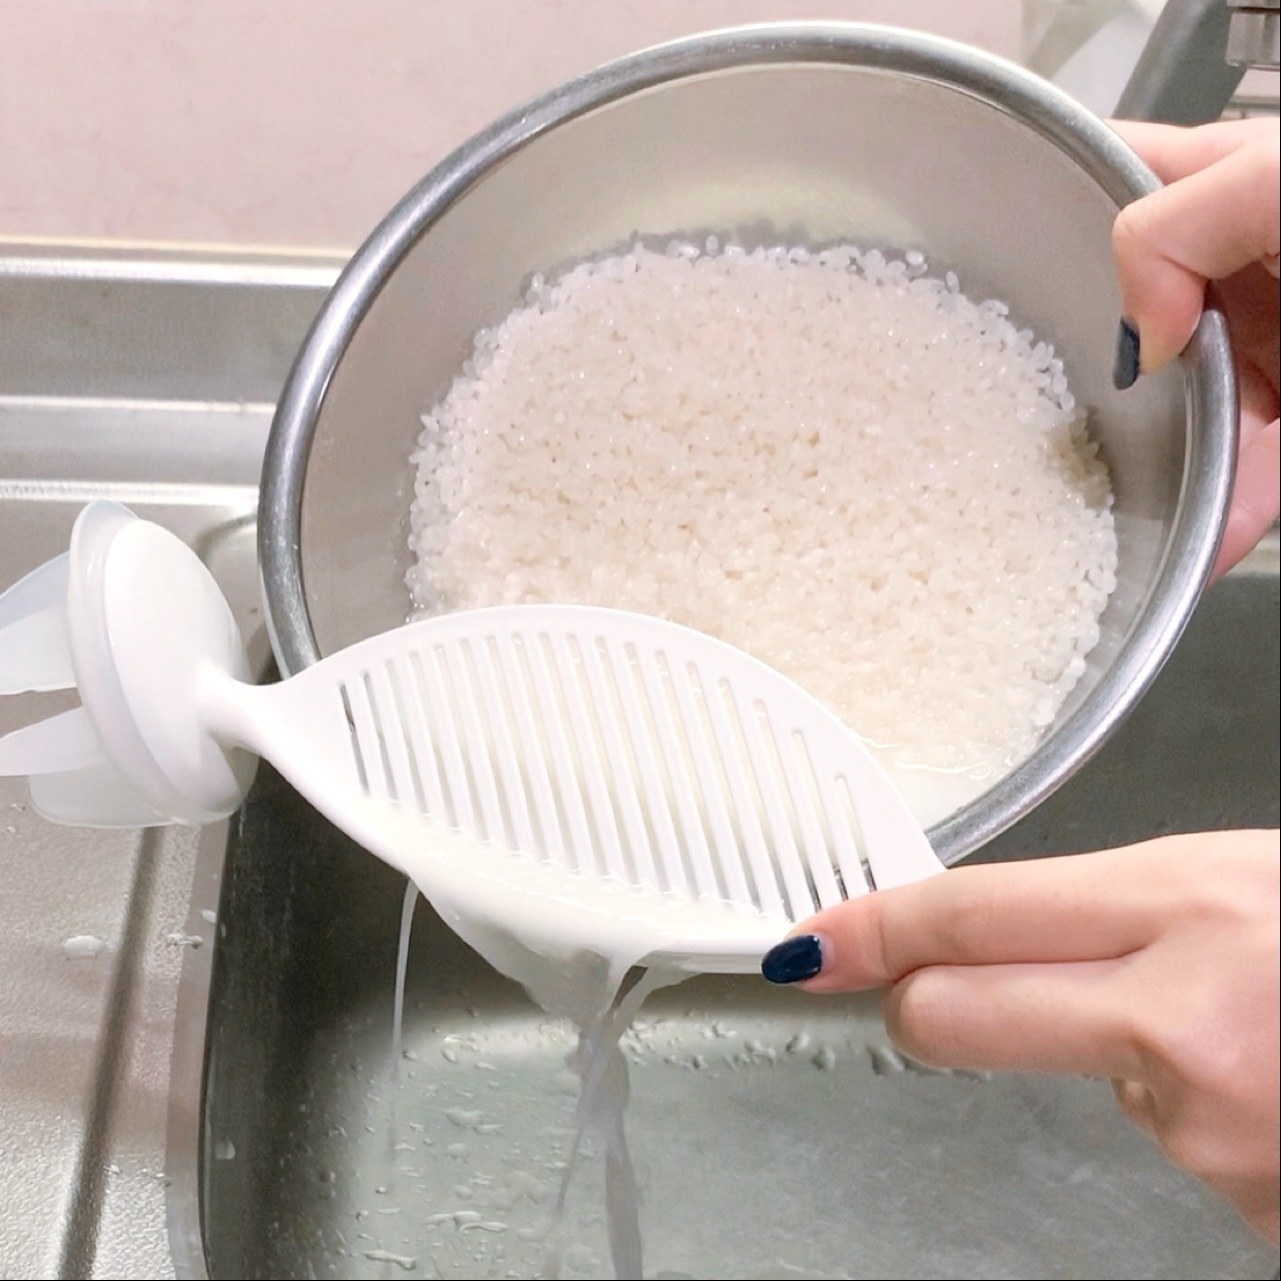 ★DAISO（ダイソー）のおすすめアイデア調理グッズ「なるほど 米とぎ」便利で大人気